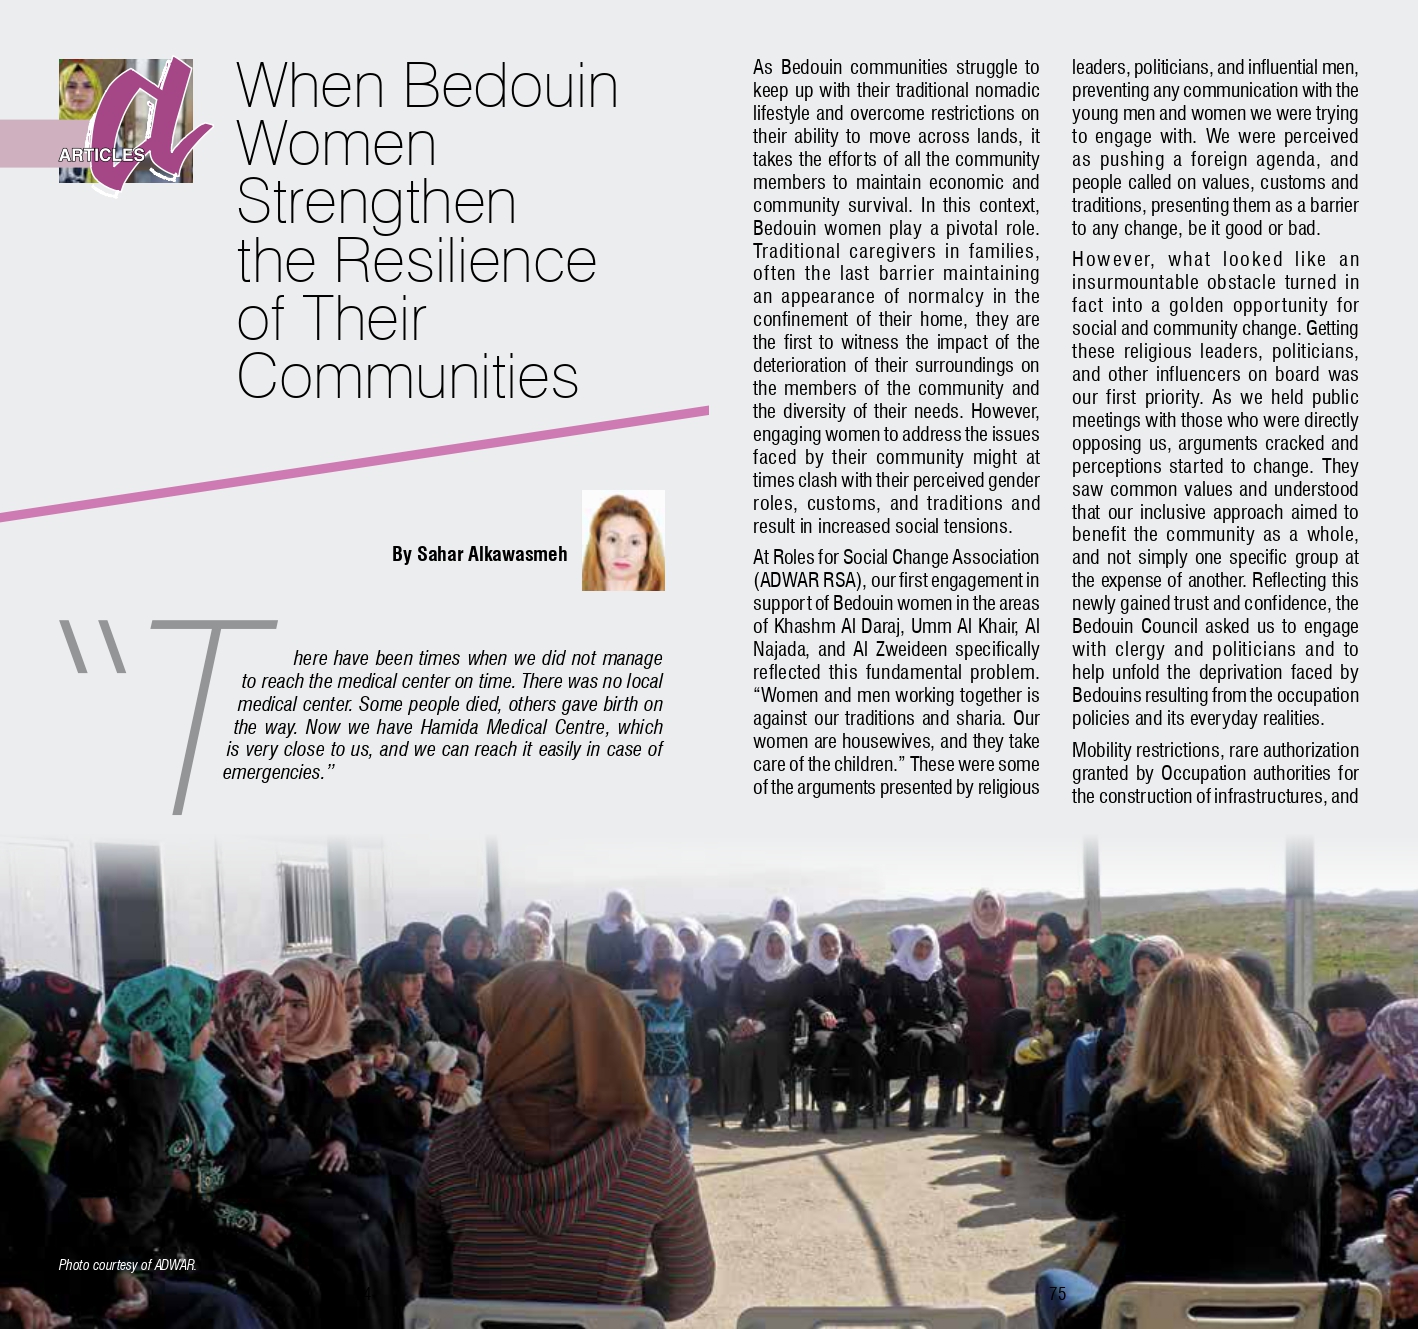  When Bedouin Women Strengthen the Resilience of Their Communities